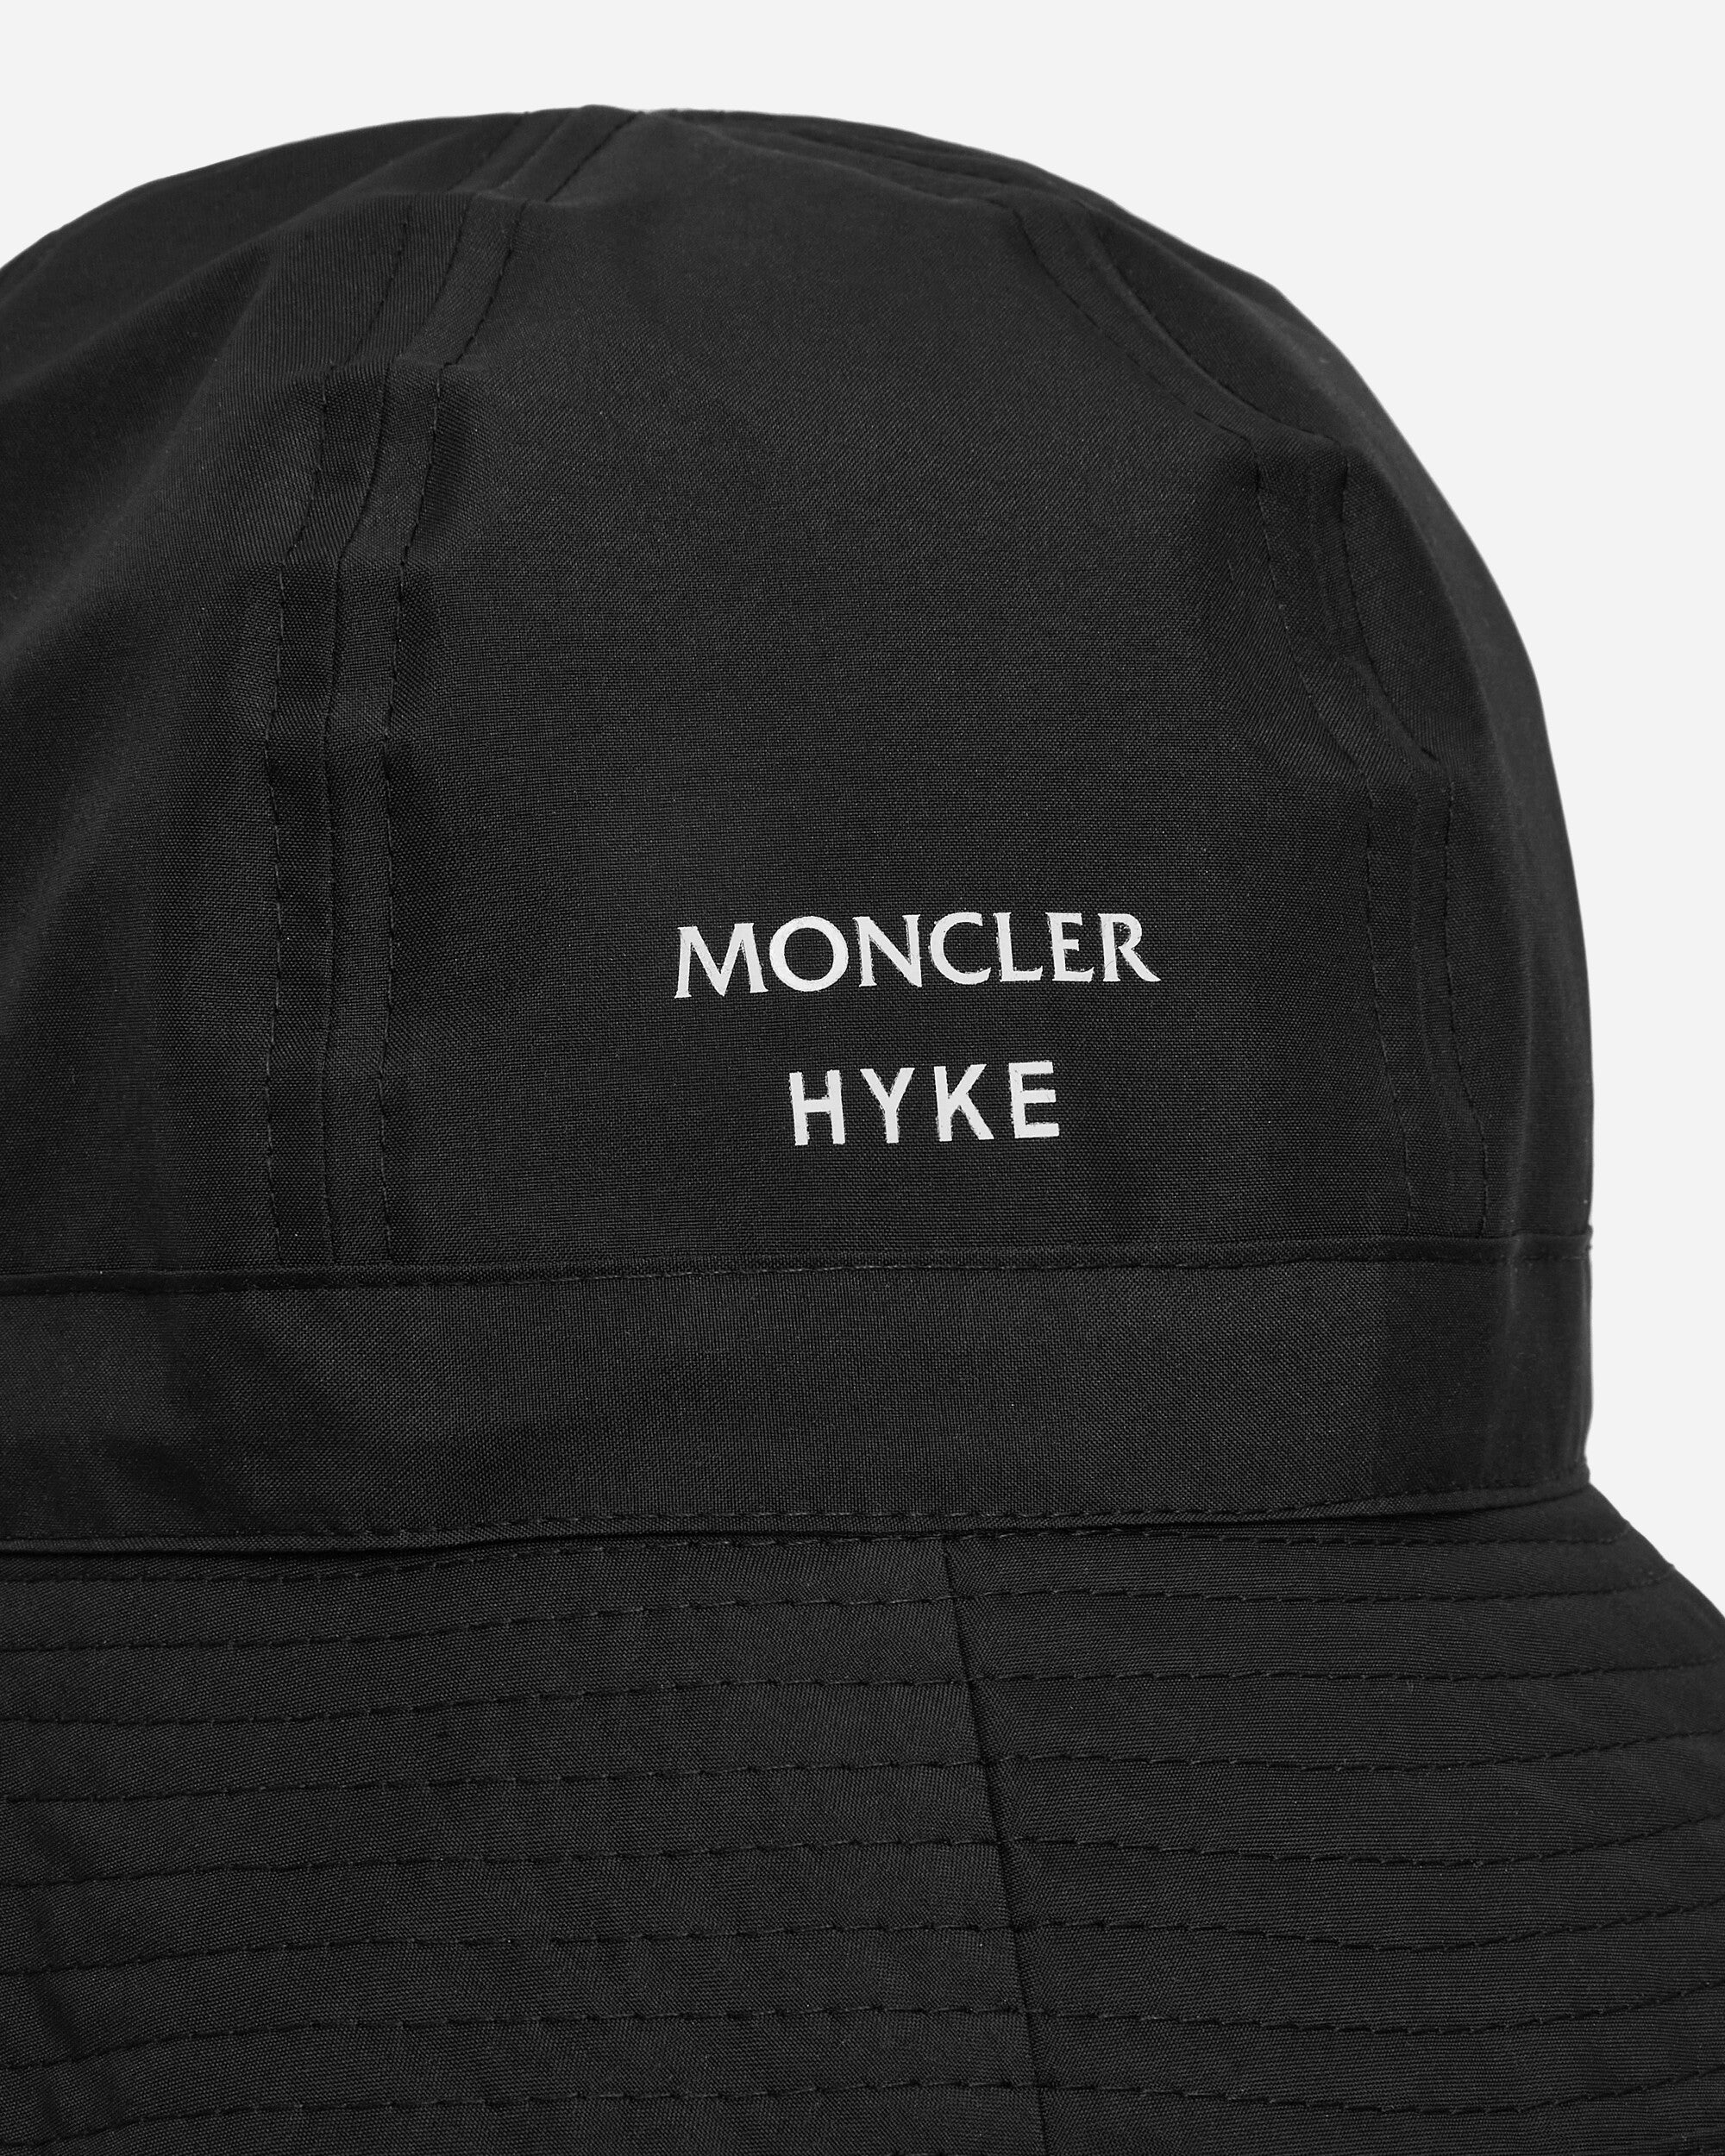 Moncler Genius 4 Moncler Hyke Bucket Hat Black Hats Bucket 3B00001M2518 999